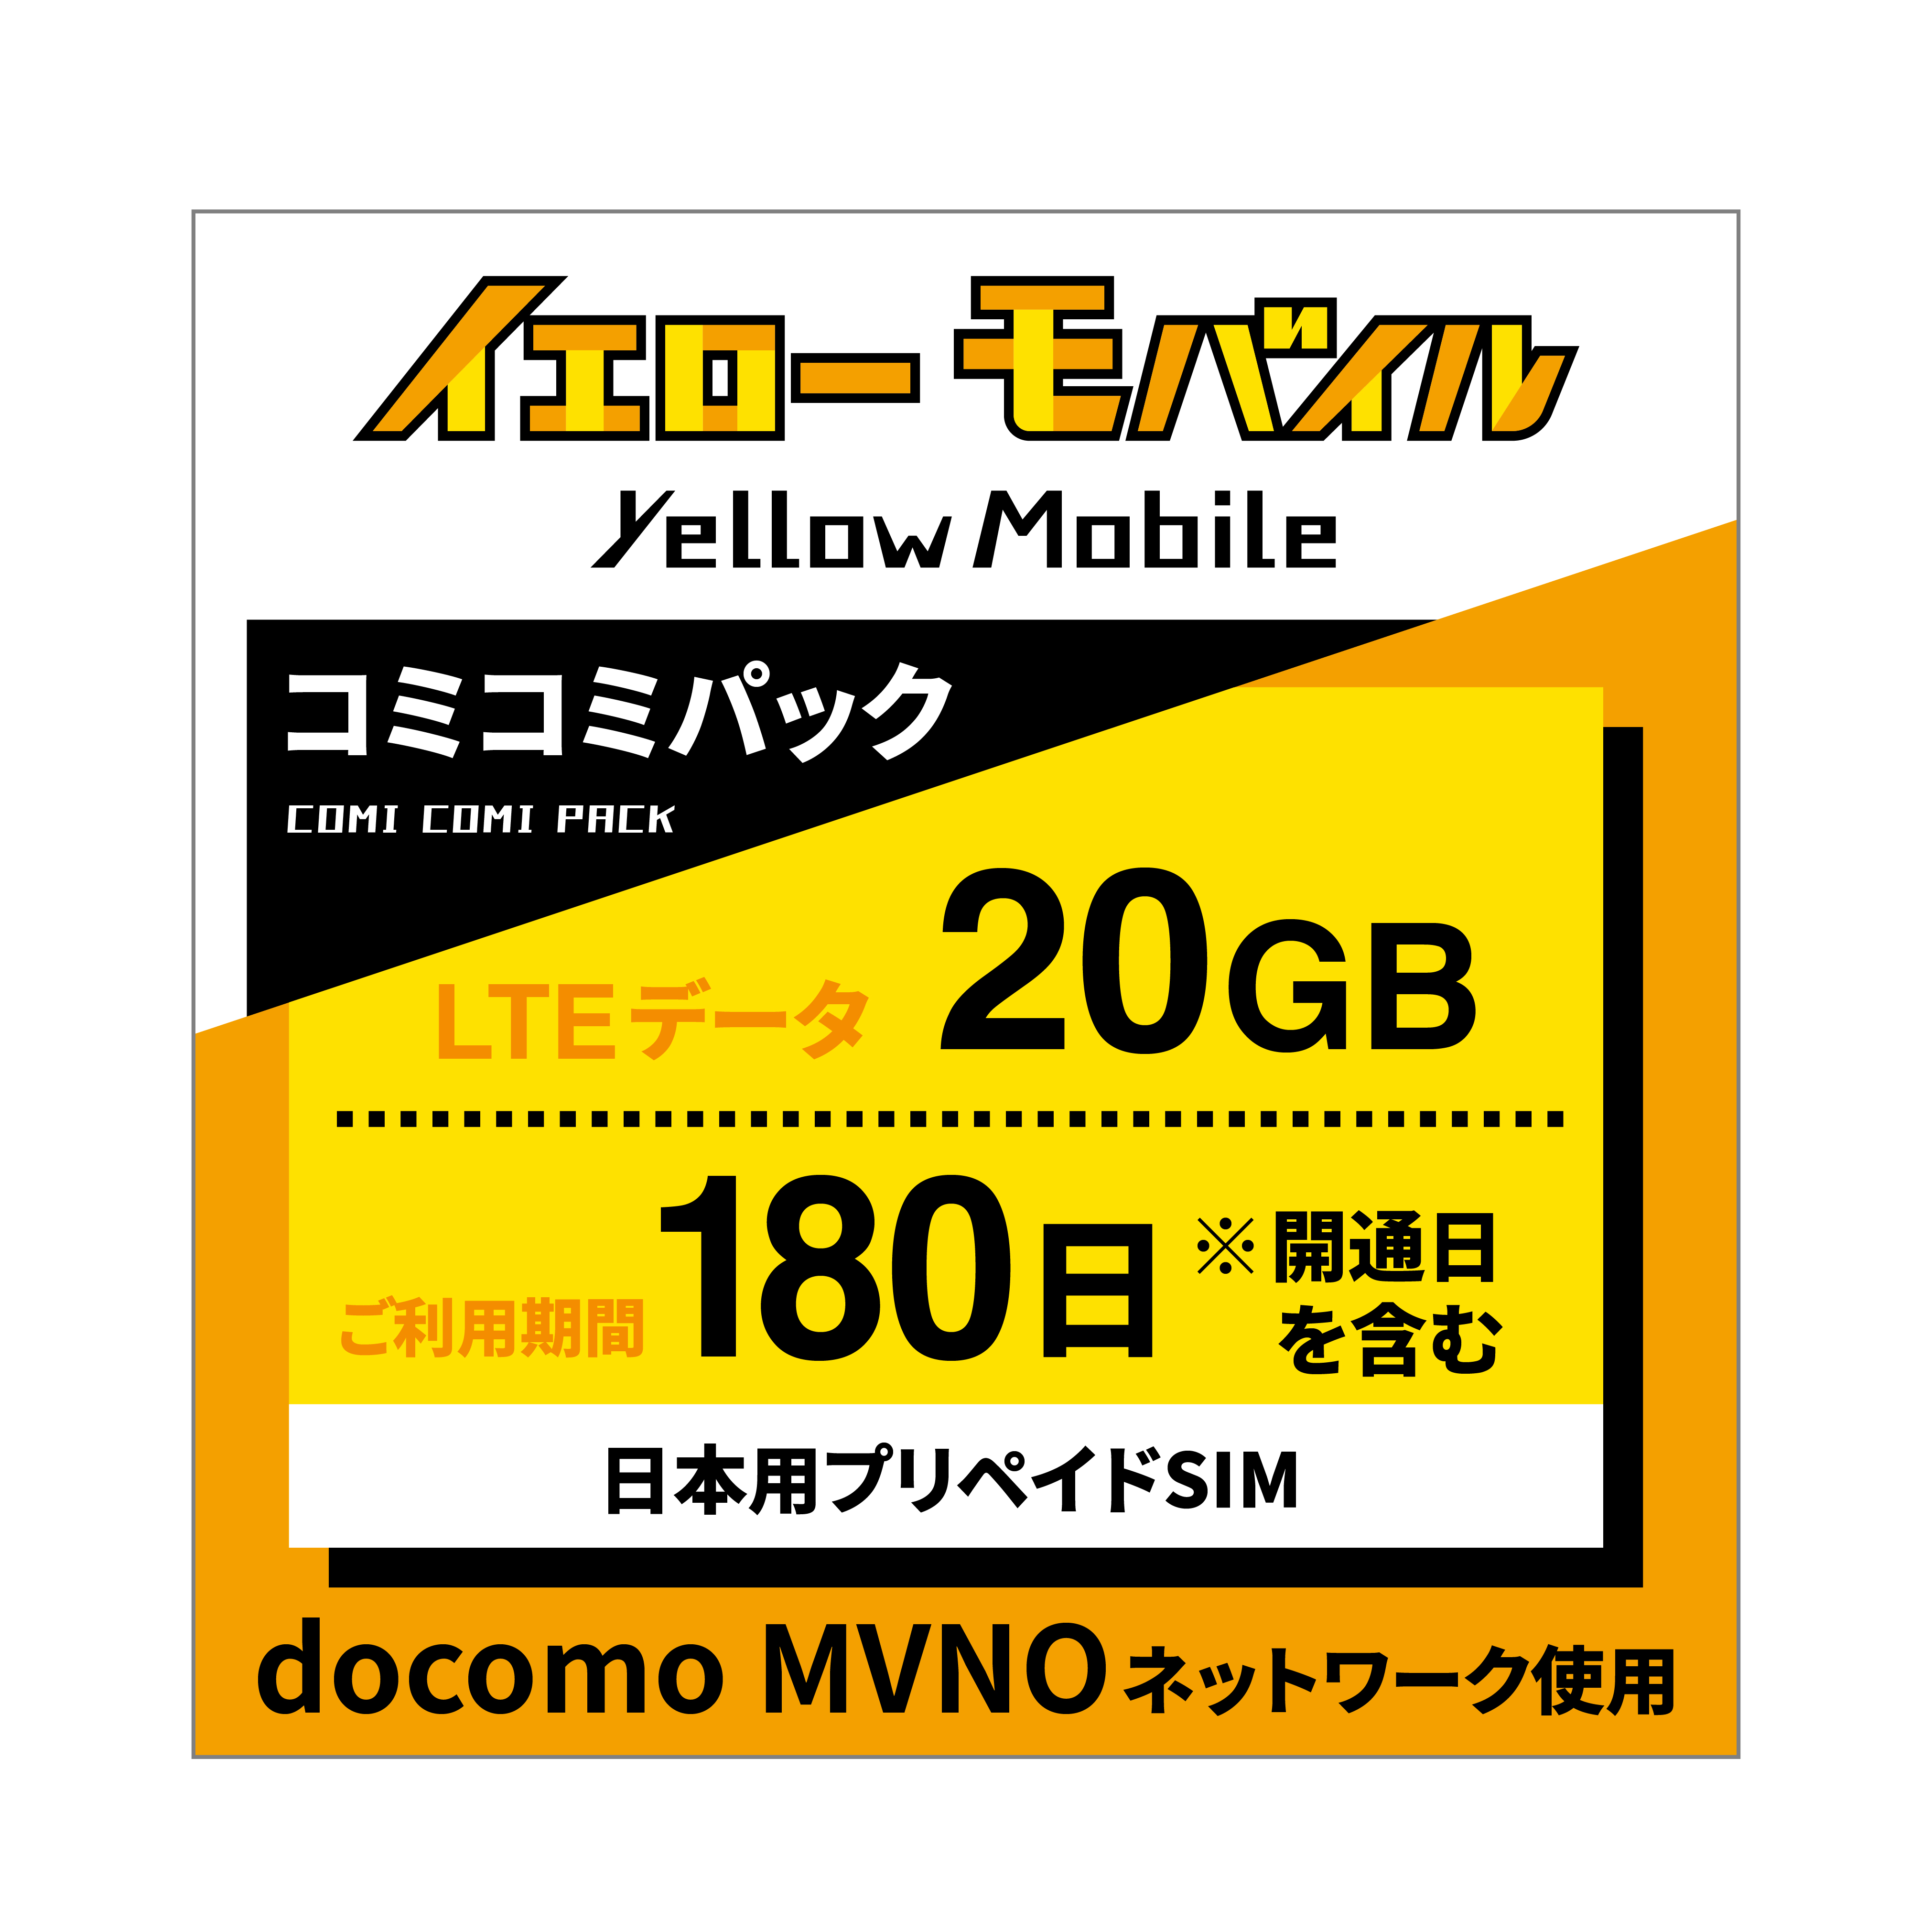  Japan domestic data exclusive use SIM comicomi pack docomo MVNO circuit 180 day 20GB